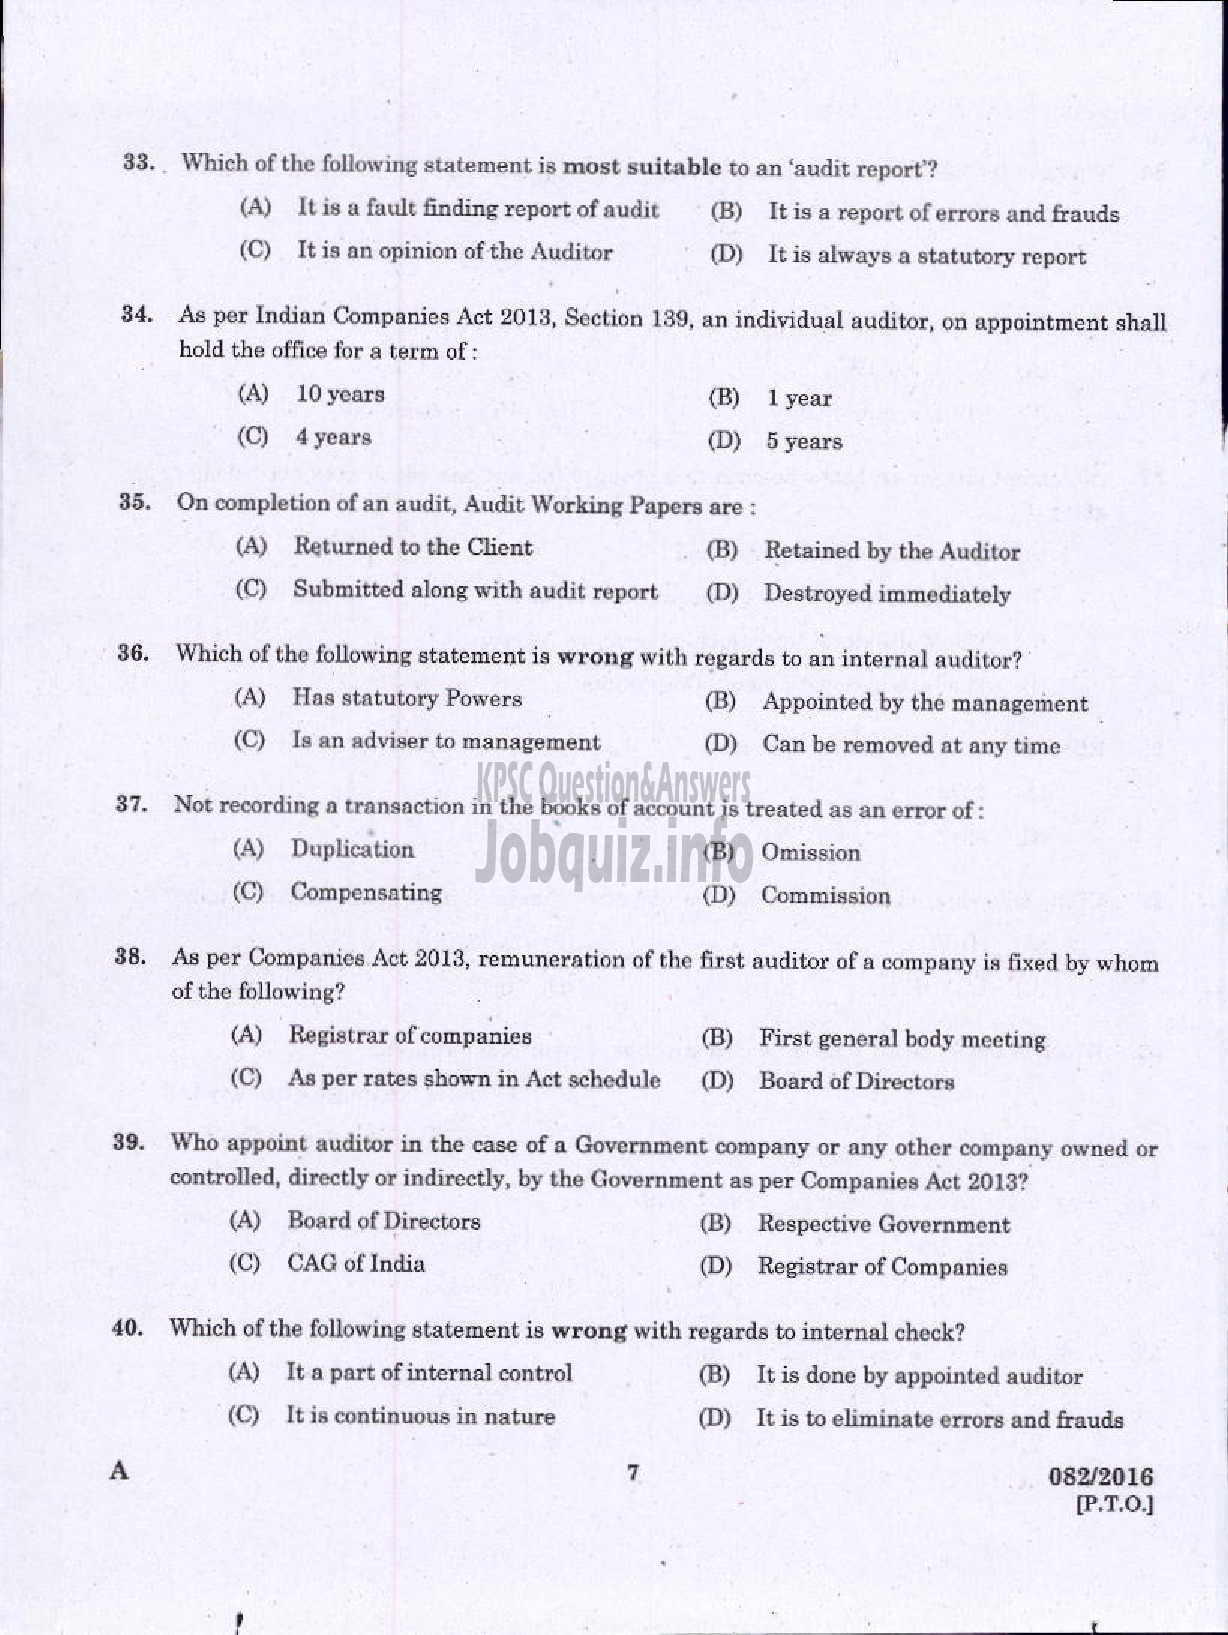 Kerala PSC Question Paper - ACCOUNTANT /JUNIOR ACCOUNTANT /ACCOUNTS ASSISTANT VARIOUS COMPANIES/CORPNS/BOARDS/SOCIETIES-5